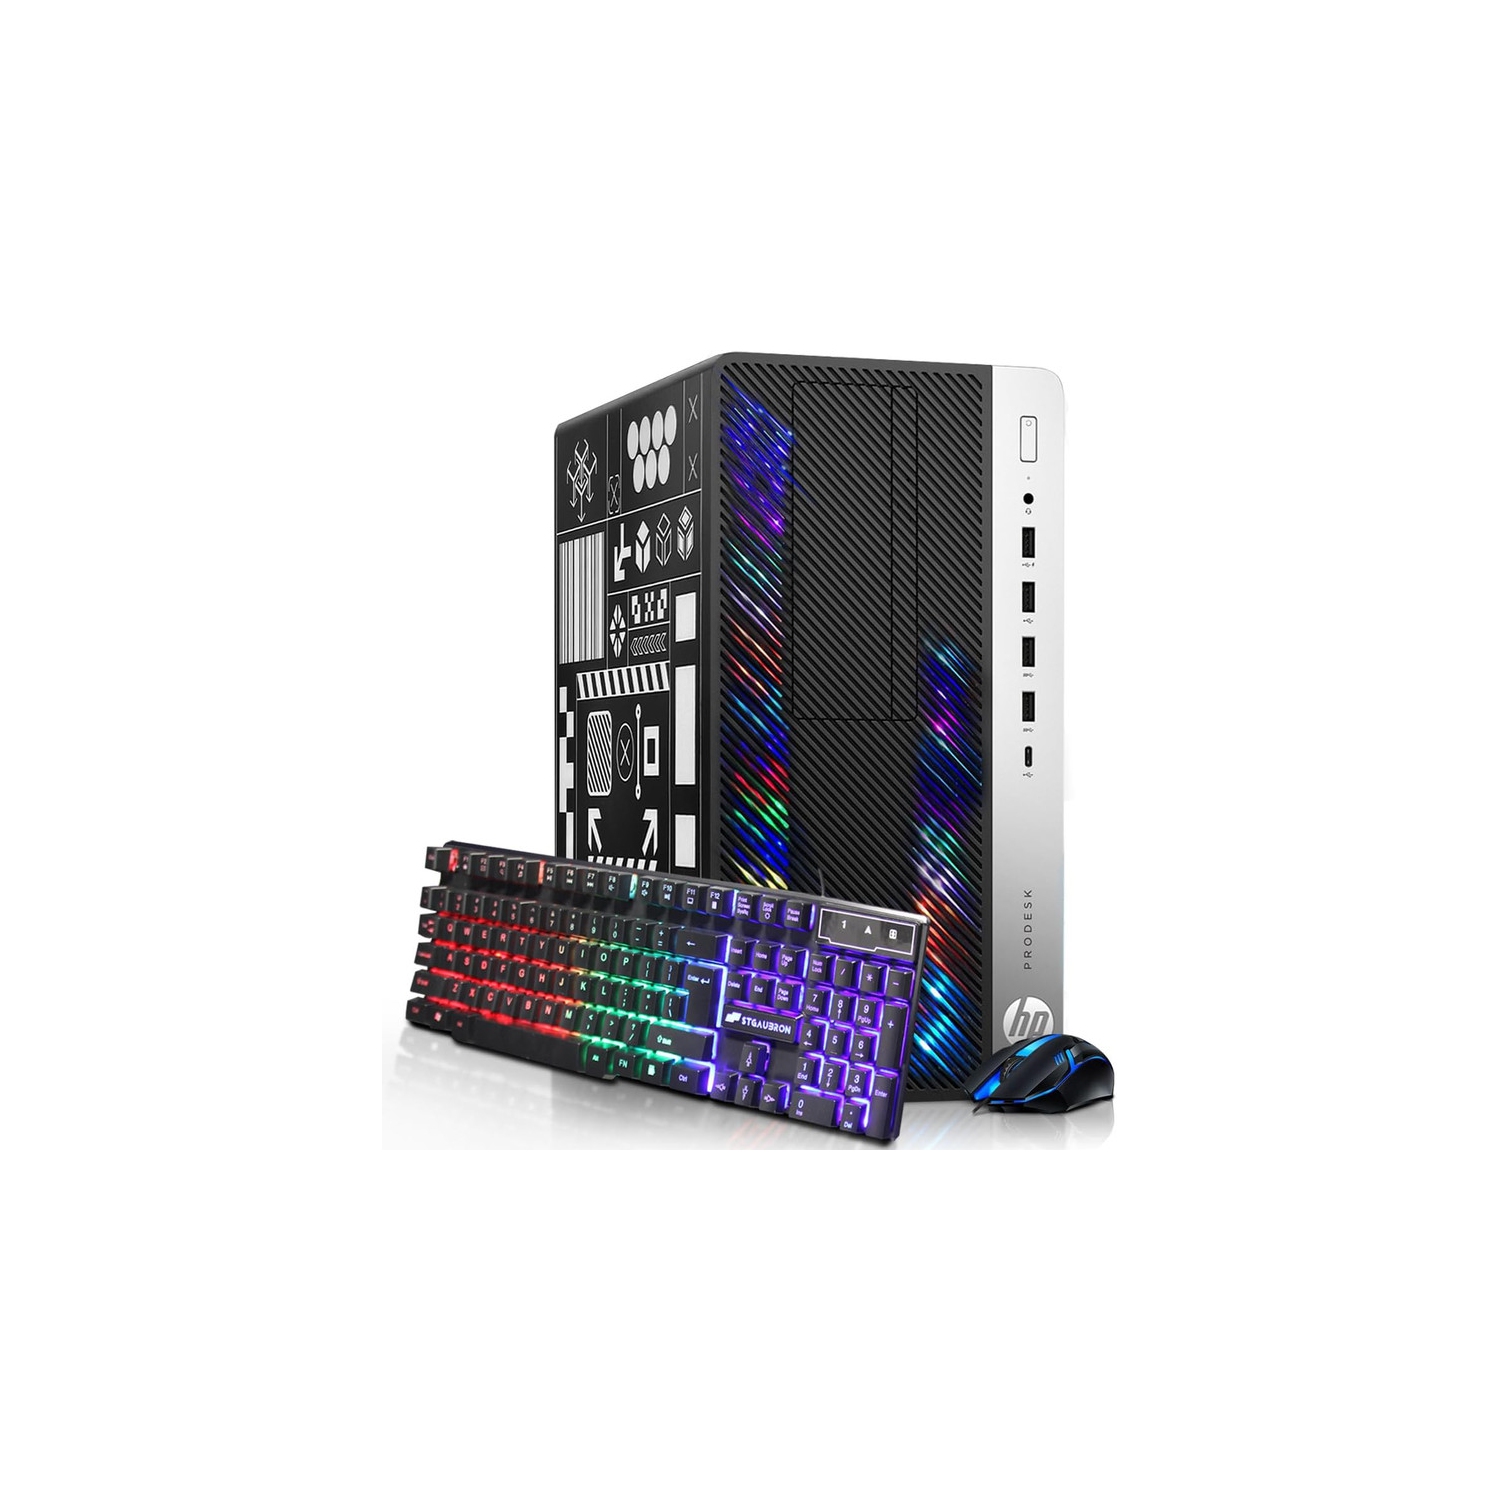 HP RGB Gaming Desktop Computer, Intel Quad Core I5-6500 up to 3.6GHz, Radeon RX 550 4G, 16GB DDR4, 1T SSD + 3T HDD, RGB KB & MS, 600M WiFi & BT, Win 10 Pro -Refurbished Excellent